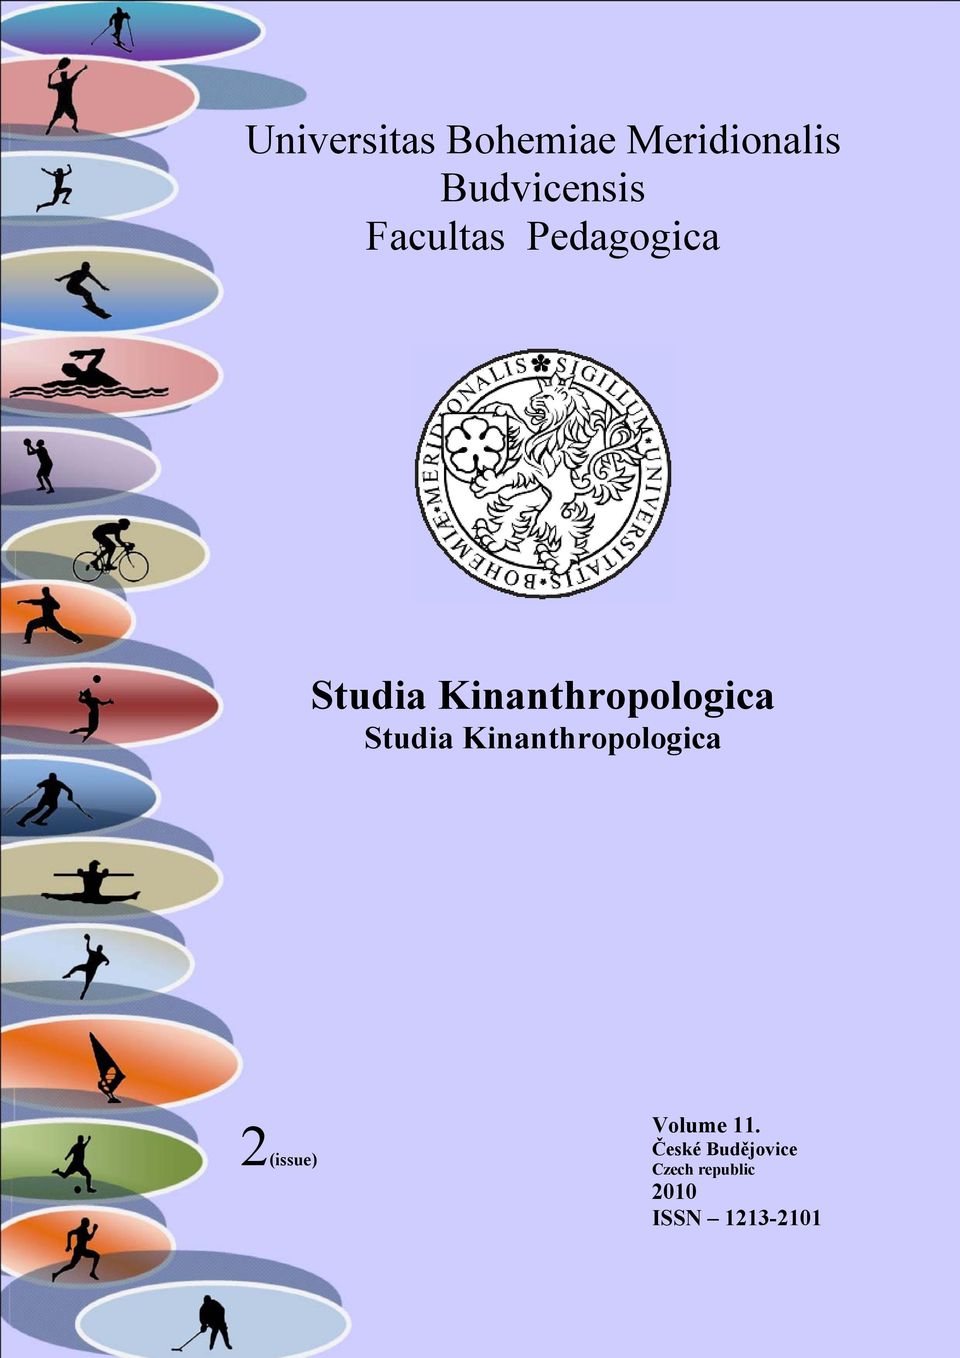 Studia Kinanthropologica 2(issue) Volume 11.